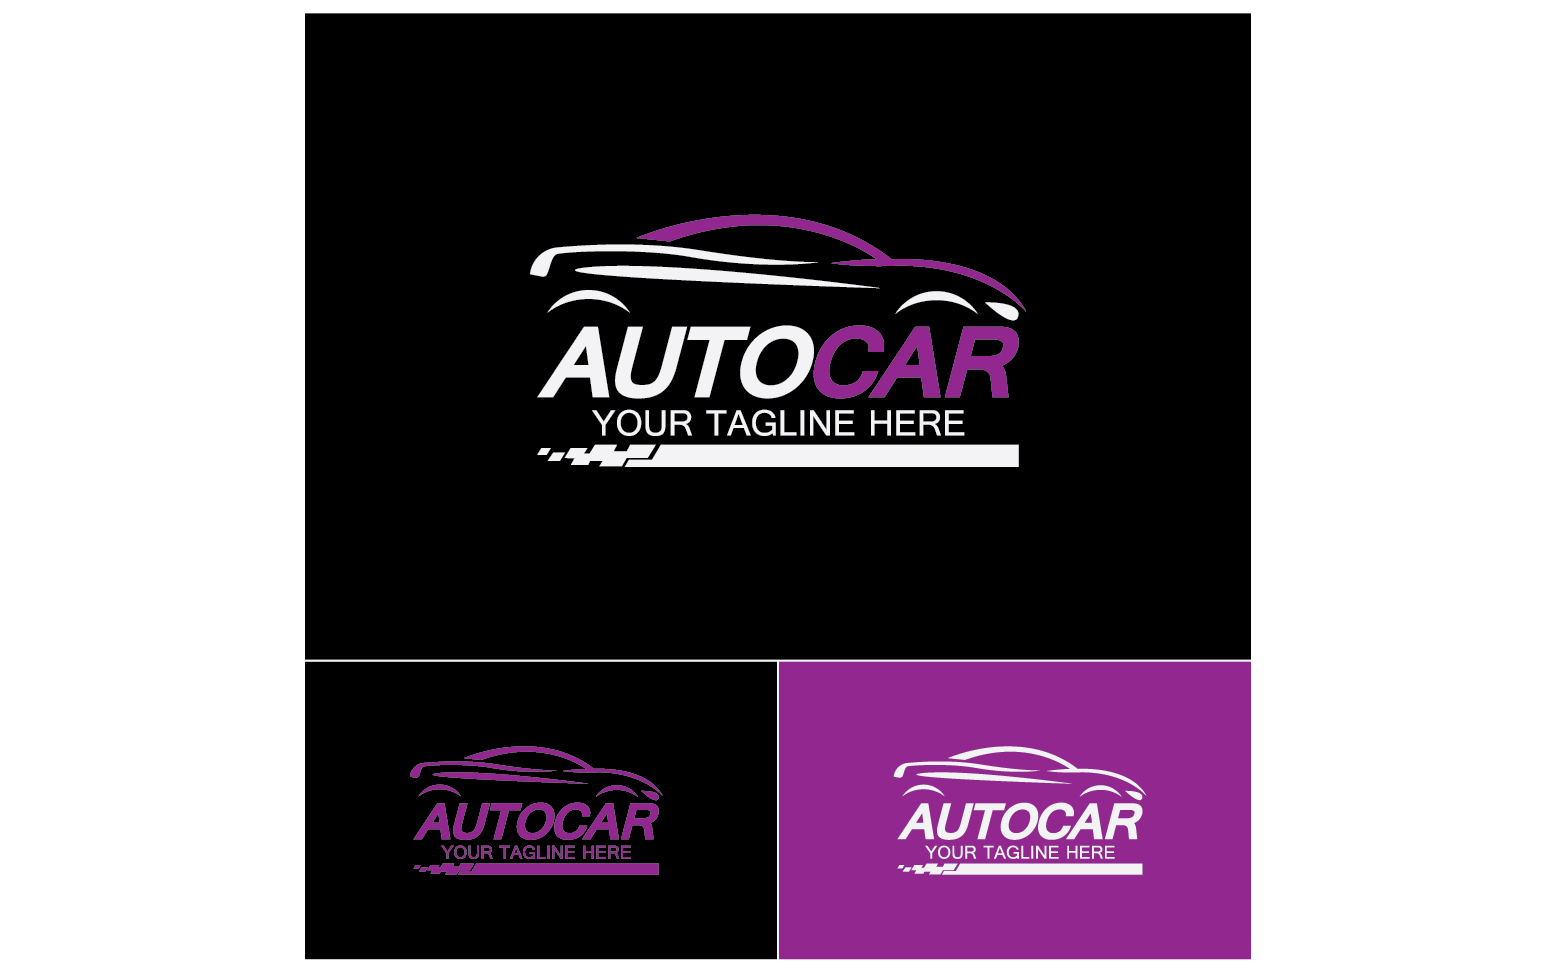 Cars dealer, automotive, autocar logo design inspiration. v63